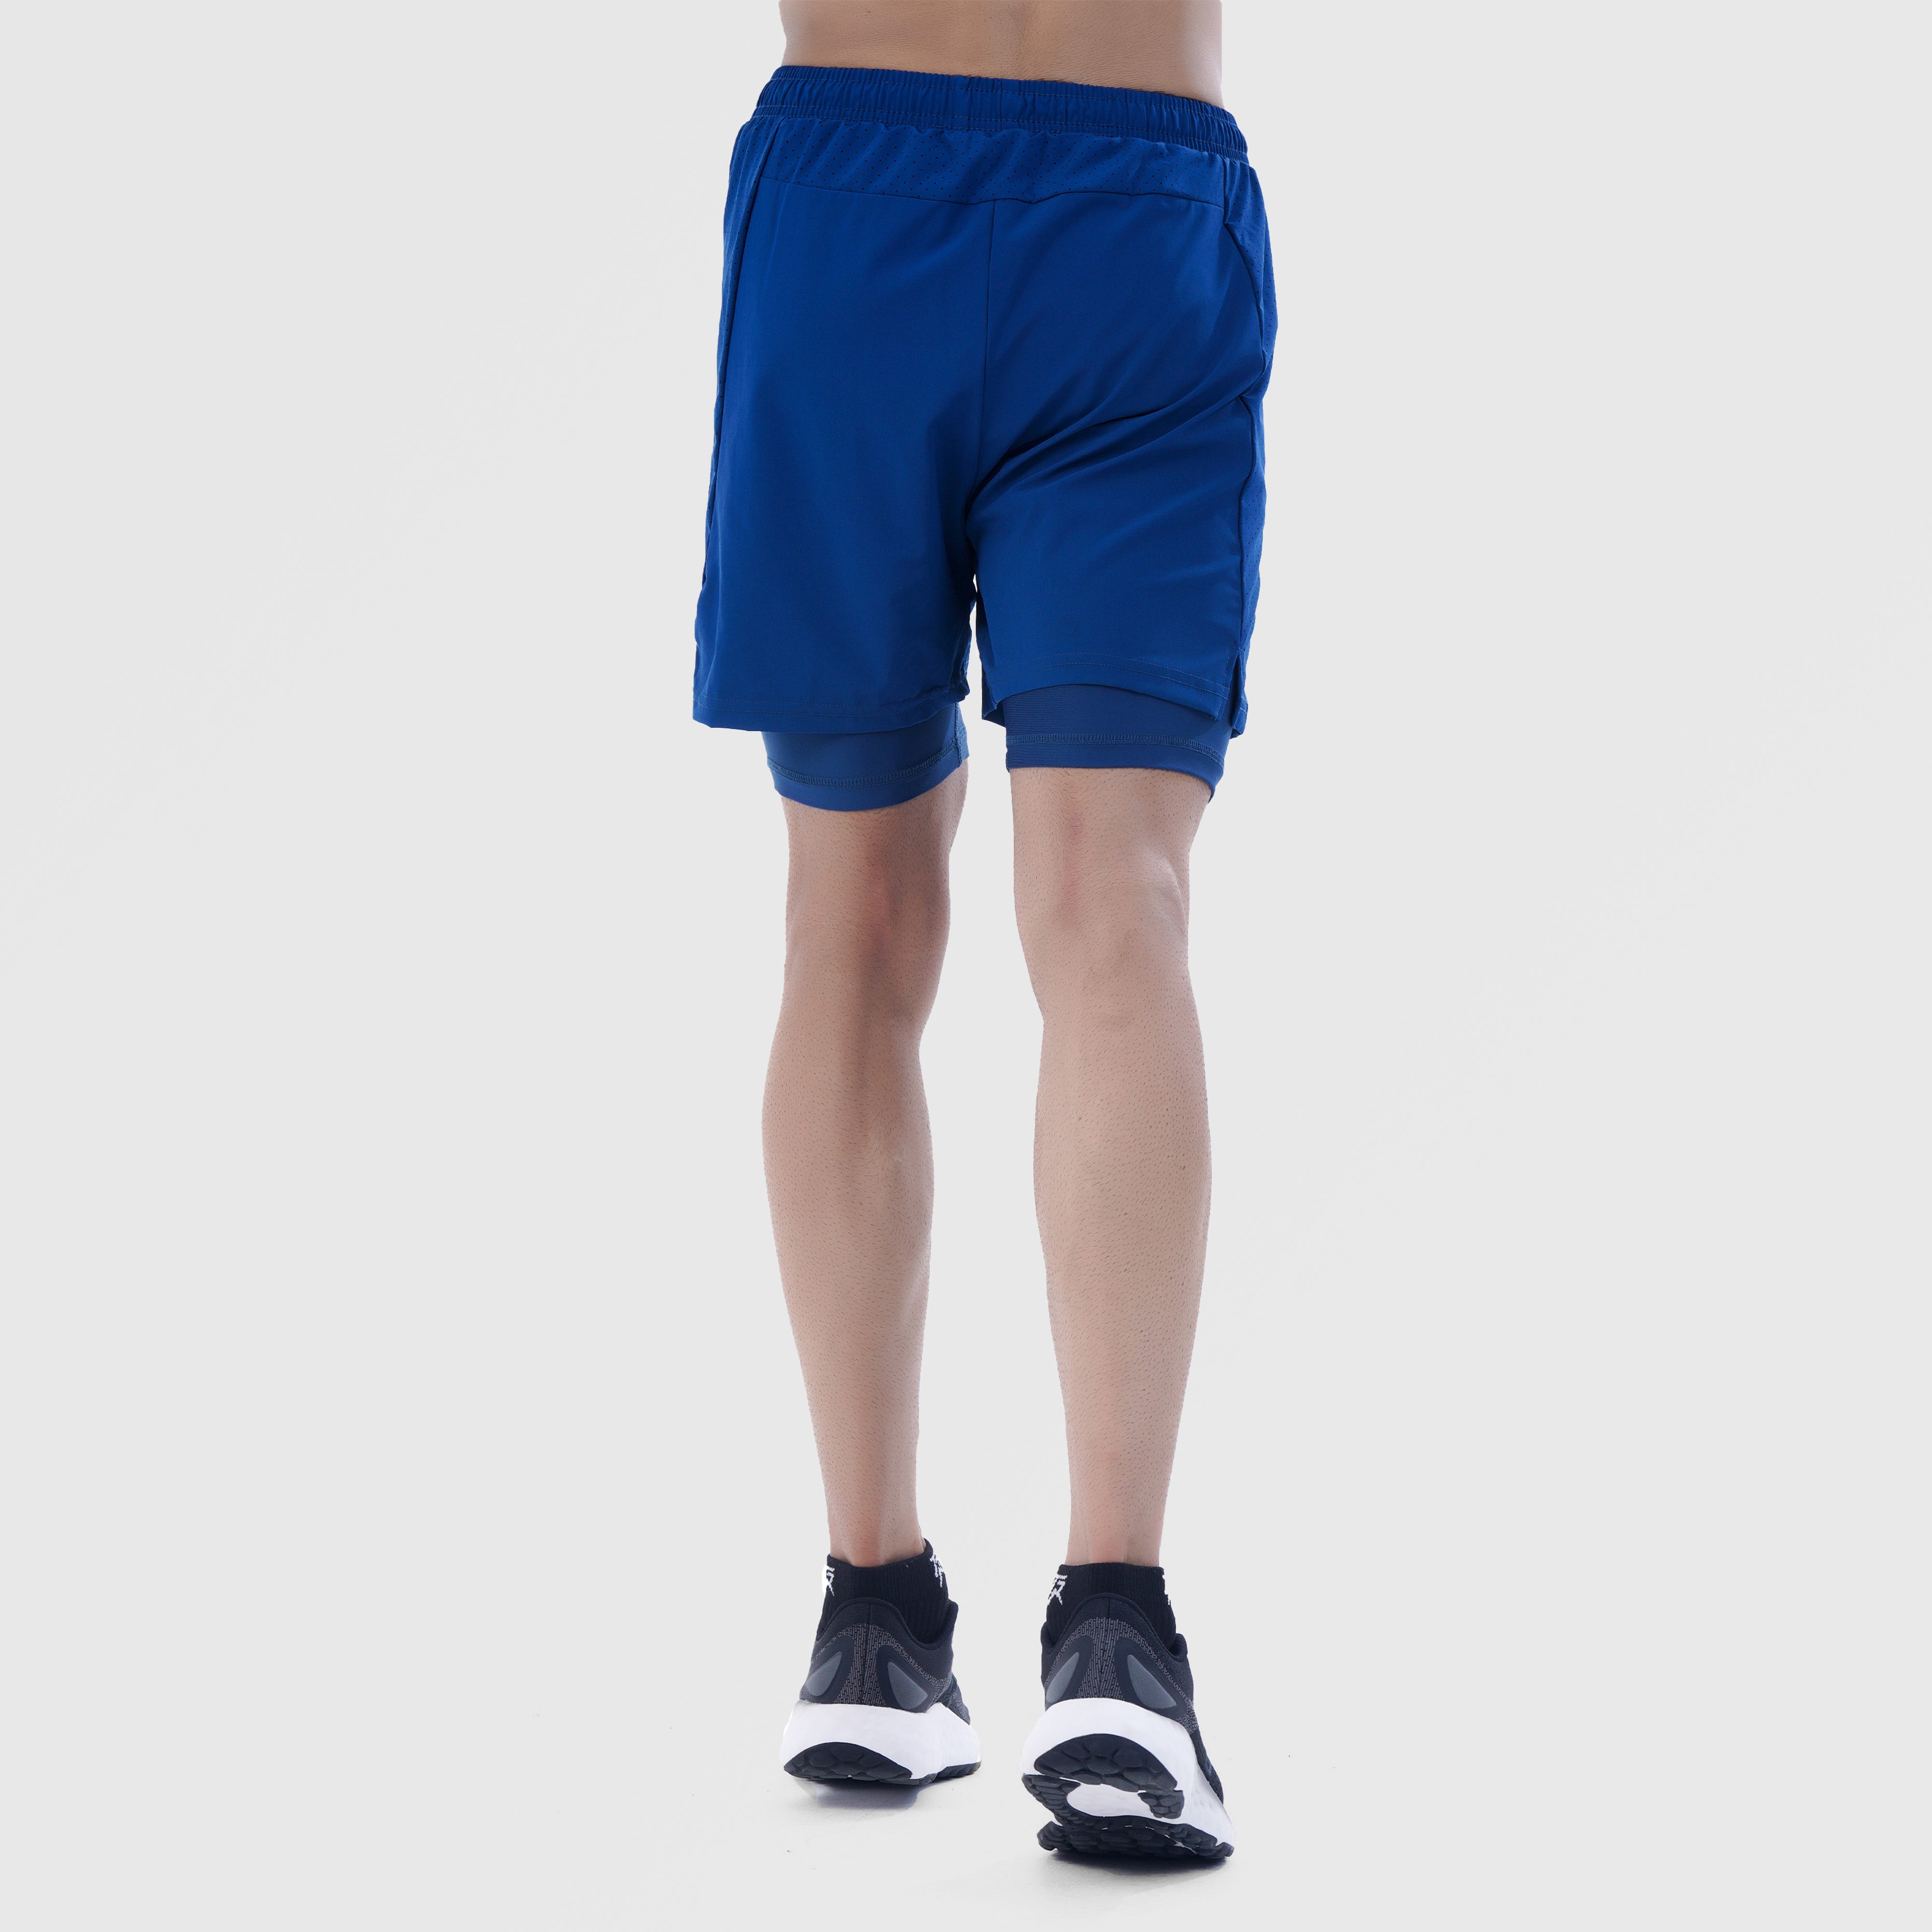 Laser Grip Shorts (Imperial Blue)